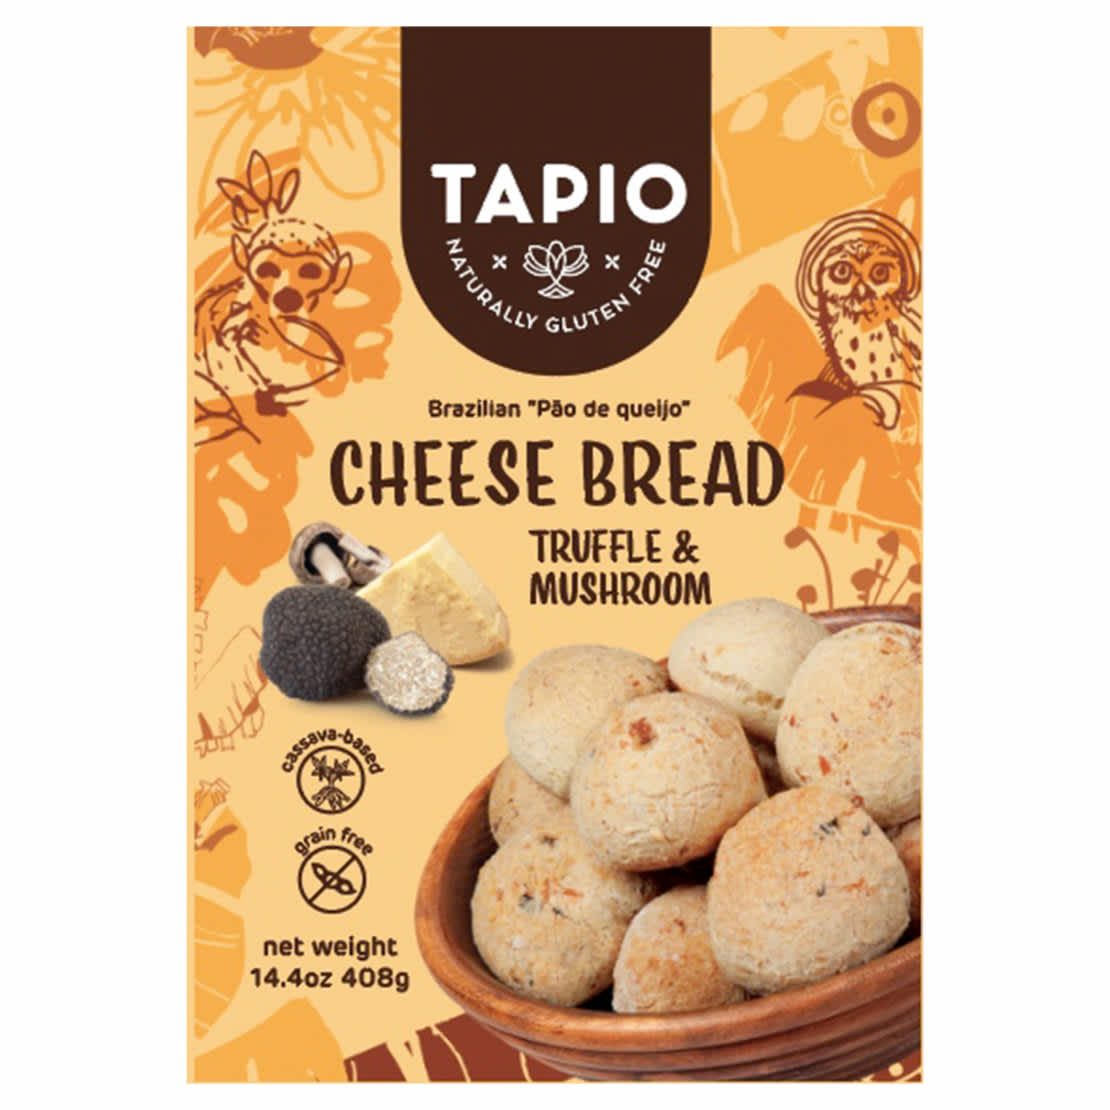 Tapio cheese bread mushroom